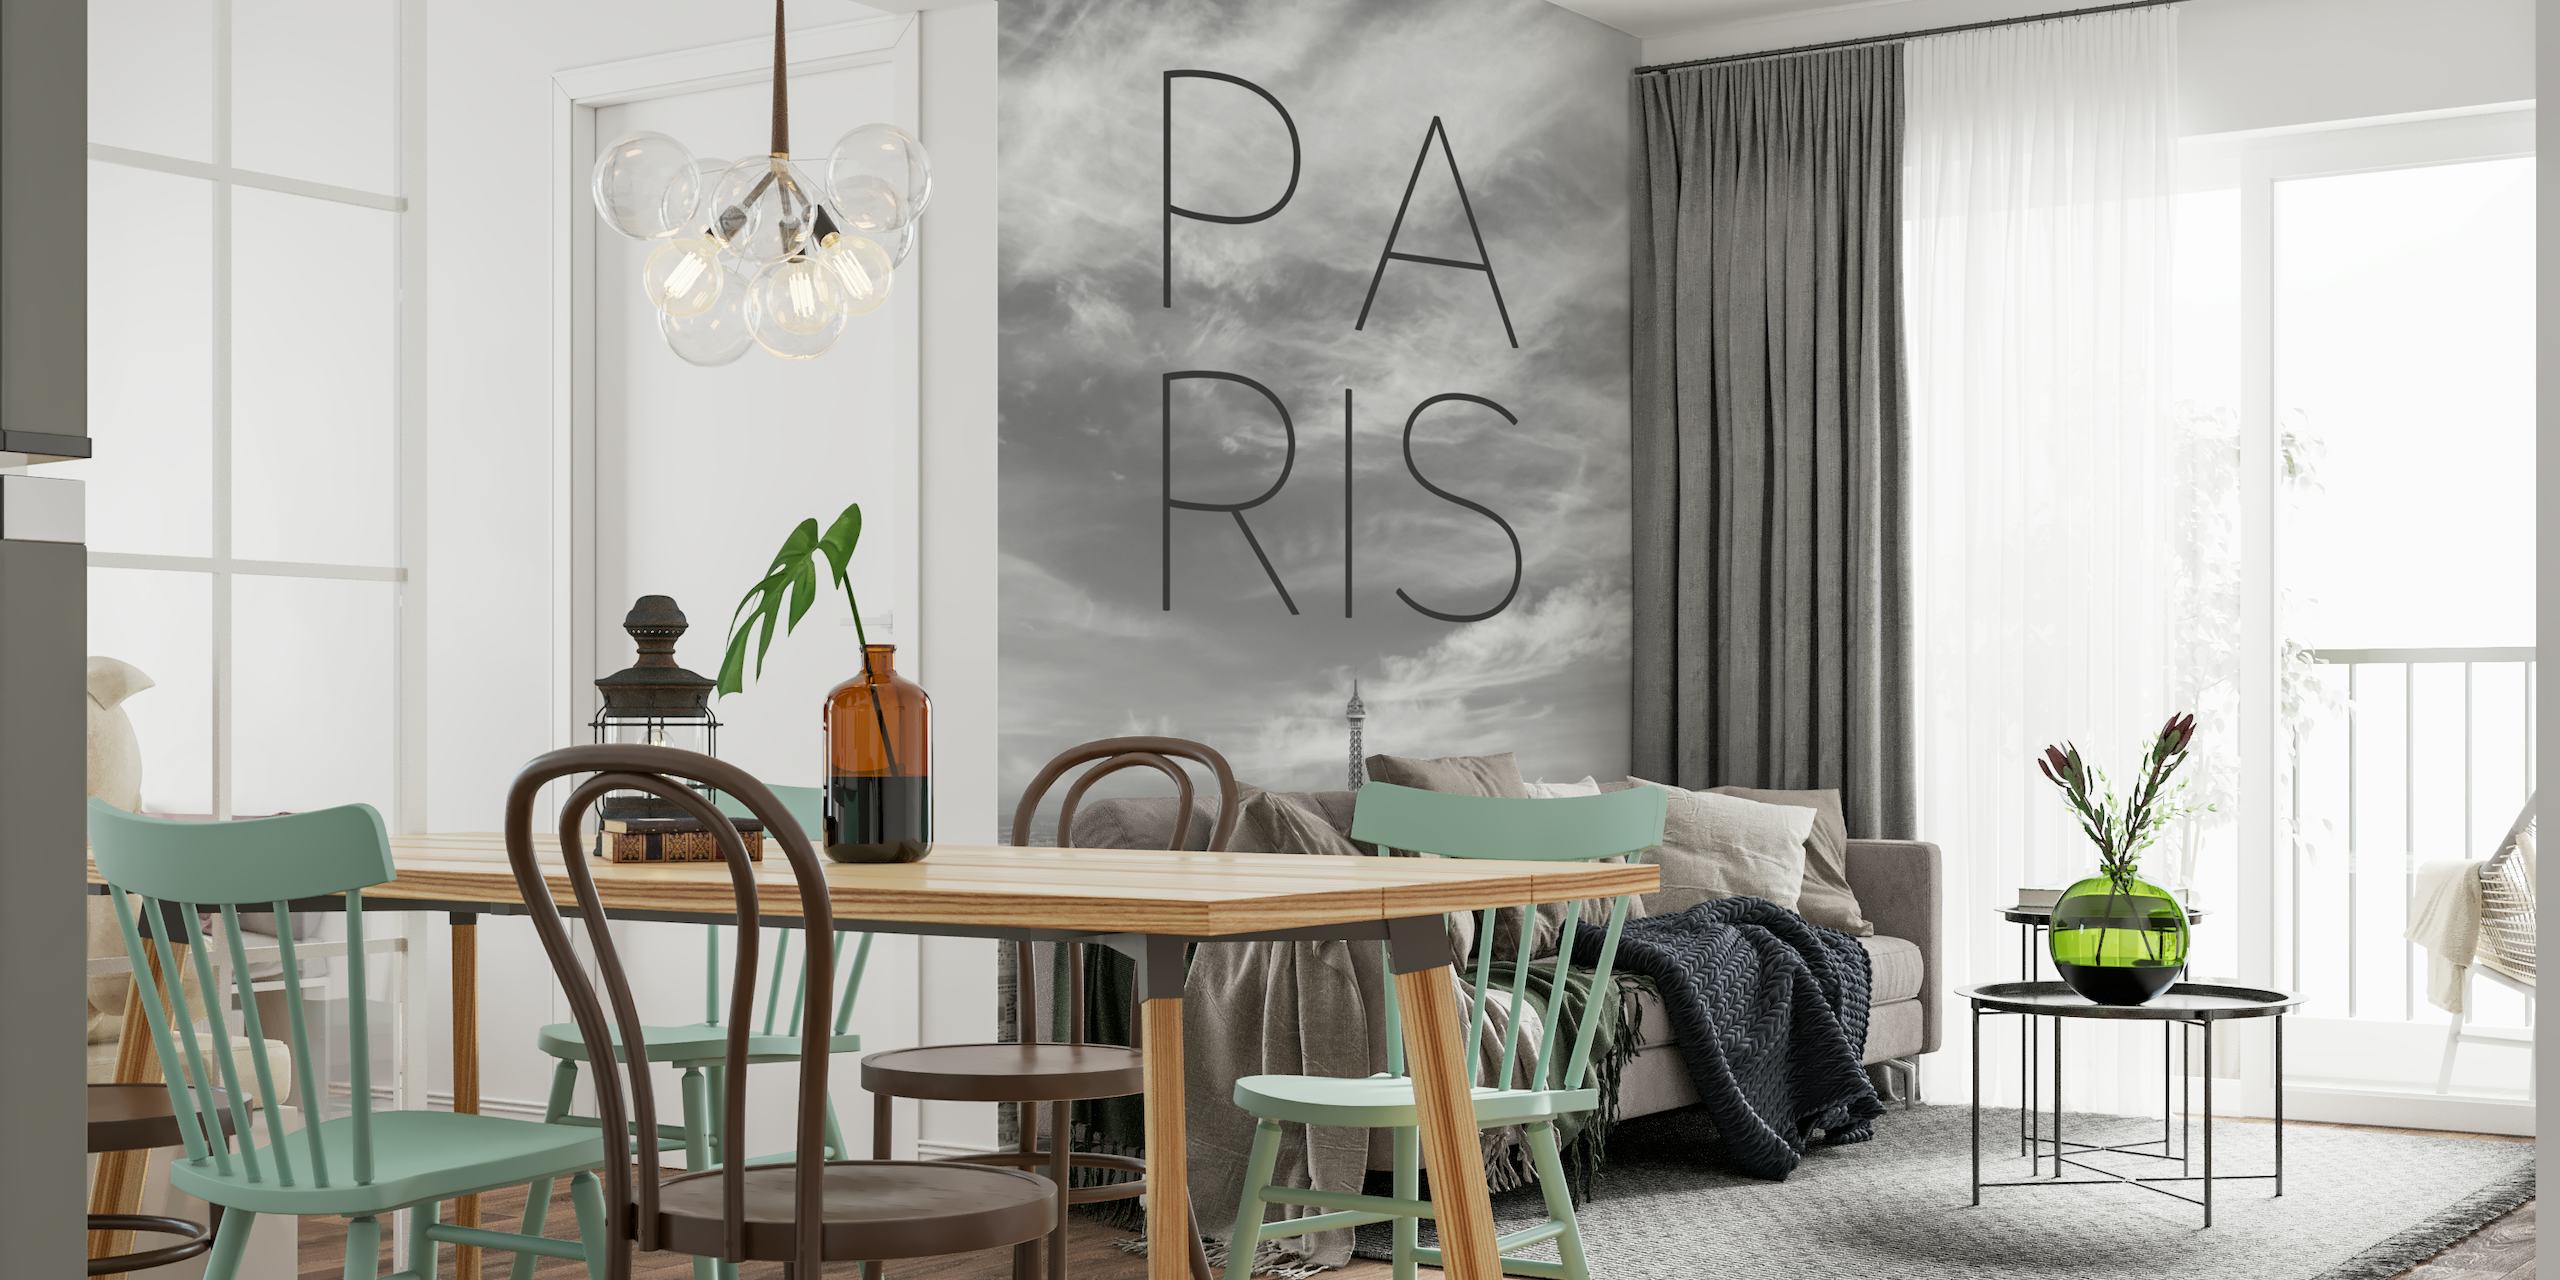 Paris Skyline with text wallpaper